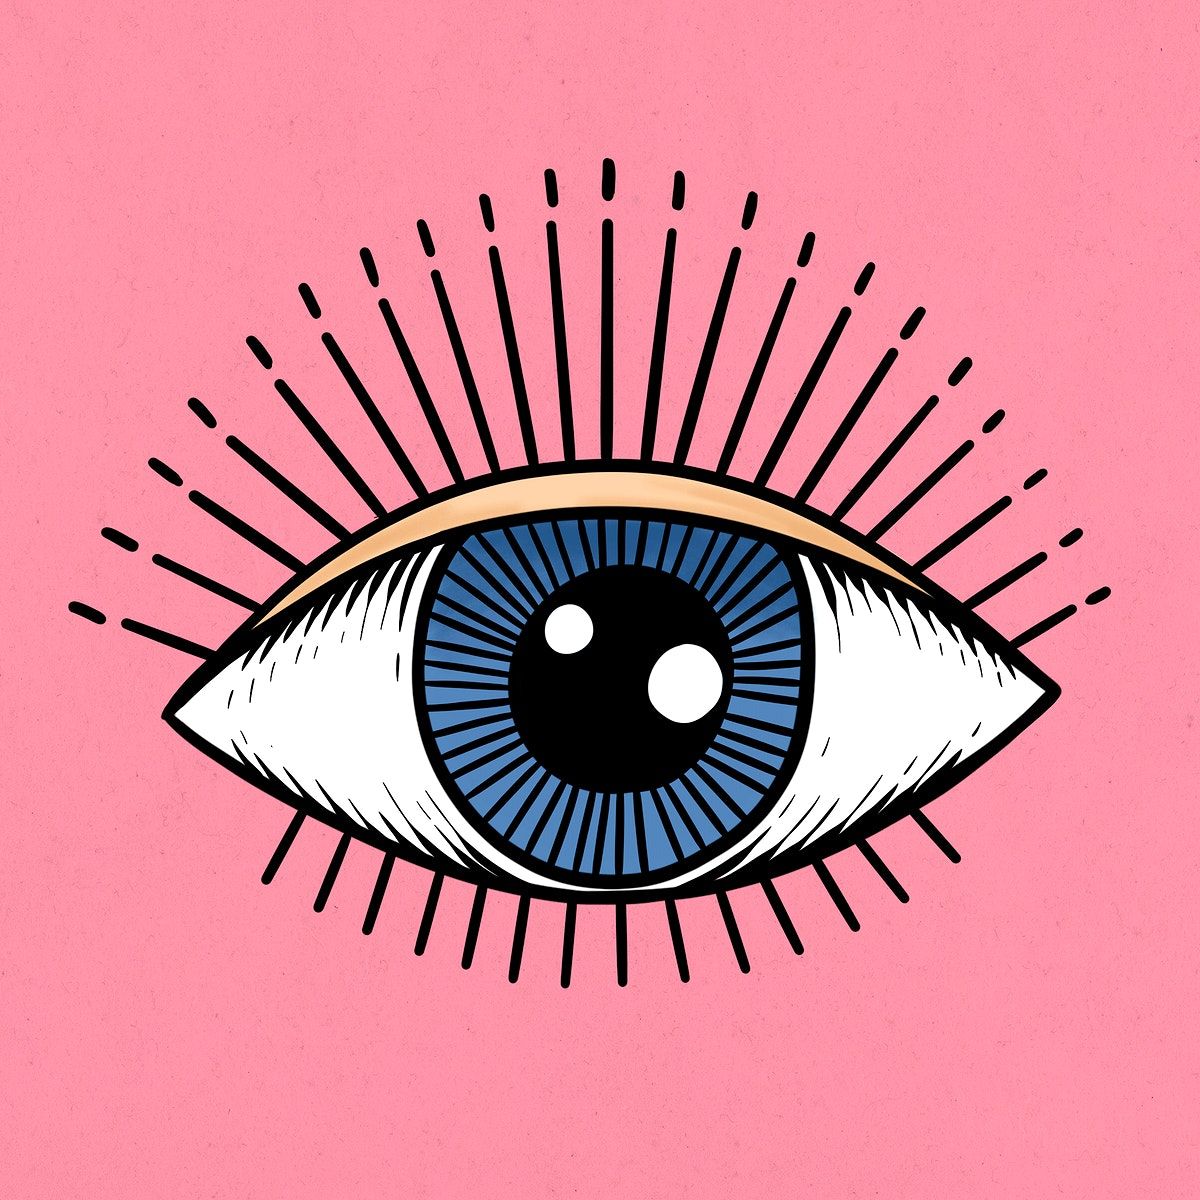 Evil eye sticker overlay on a pink background / Noon. Evil eye art, Eye illustration, Eye painting